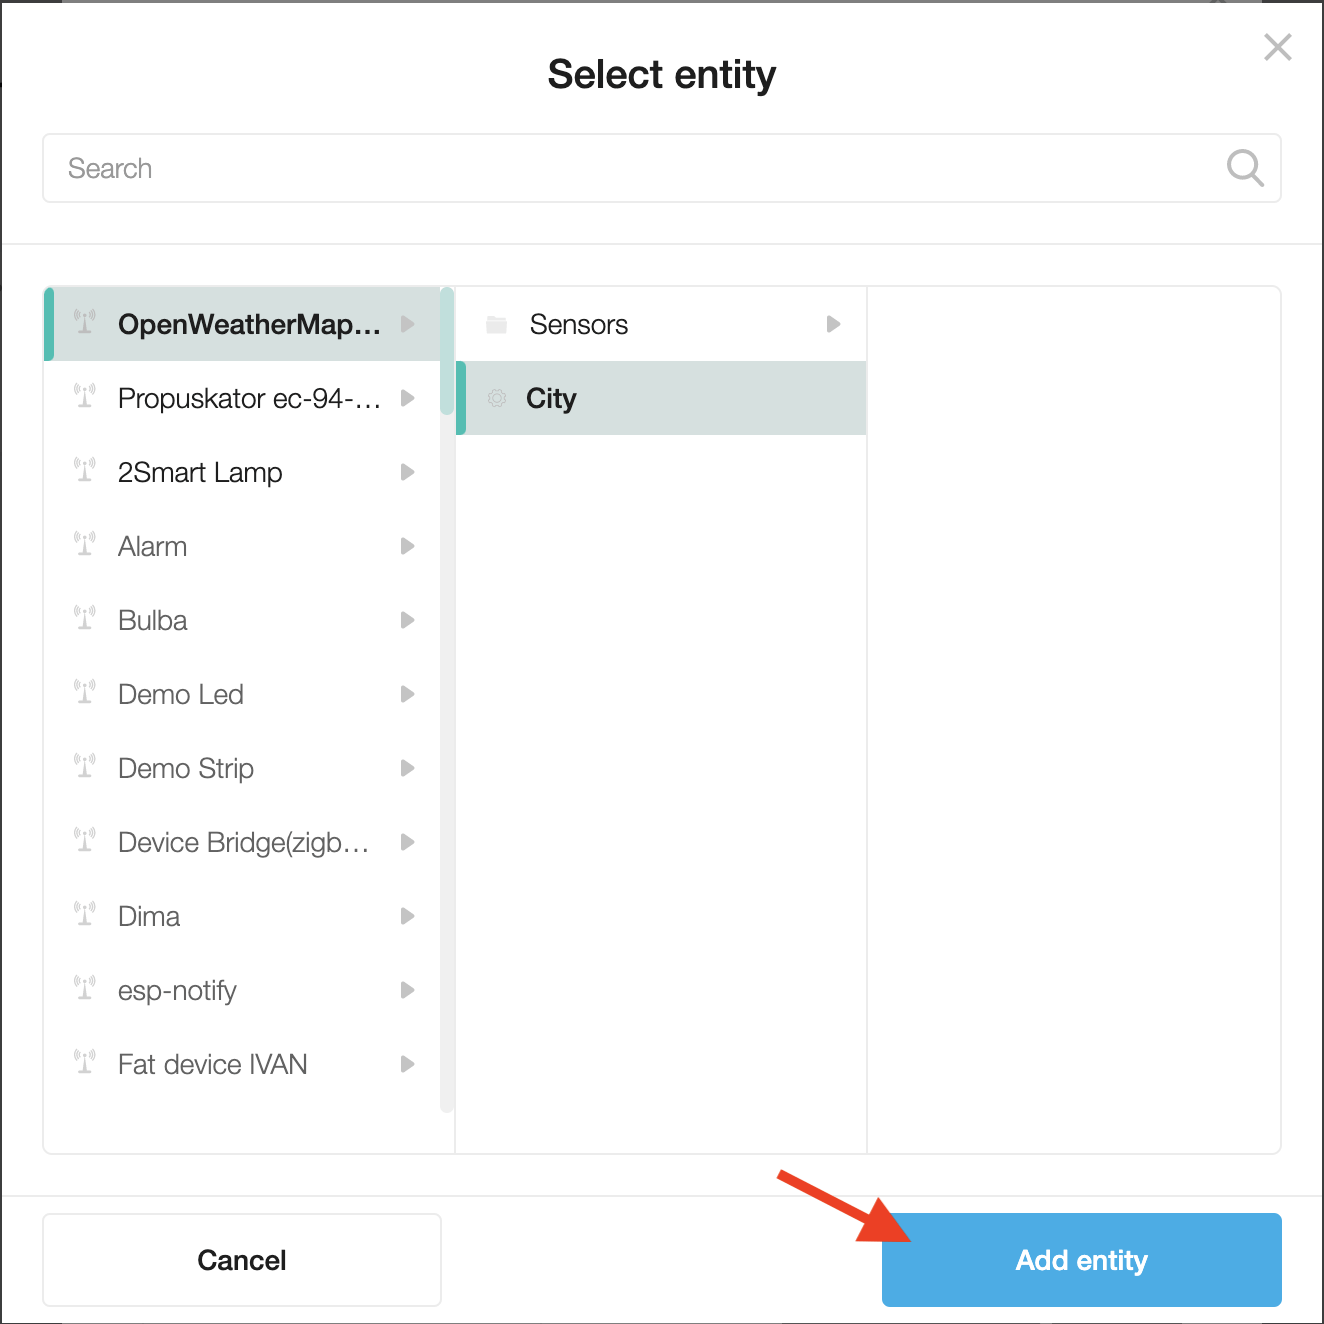 Select entity window